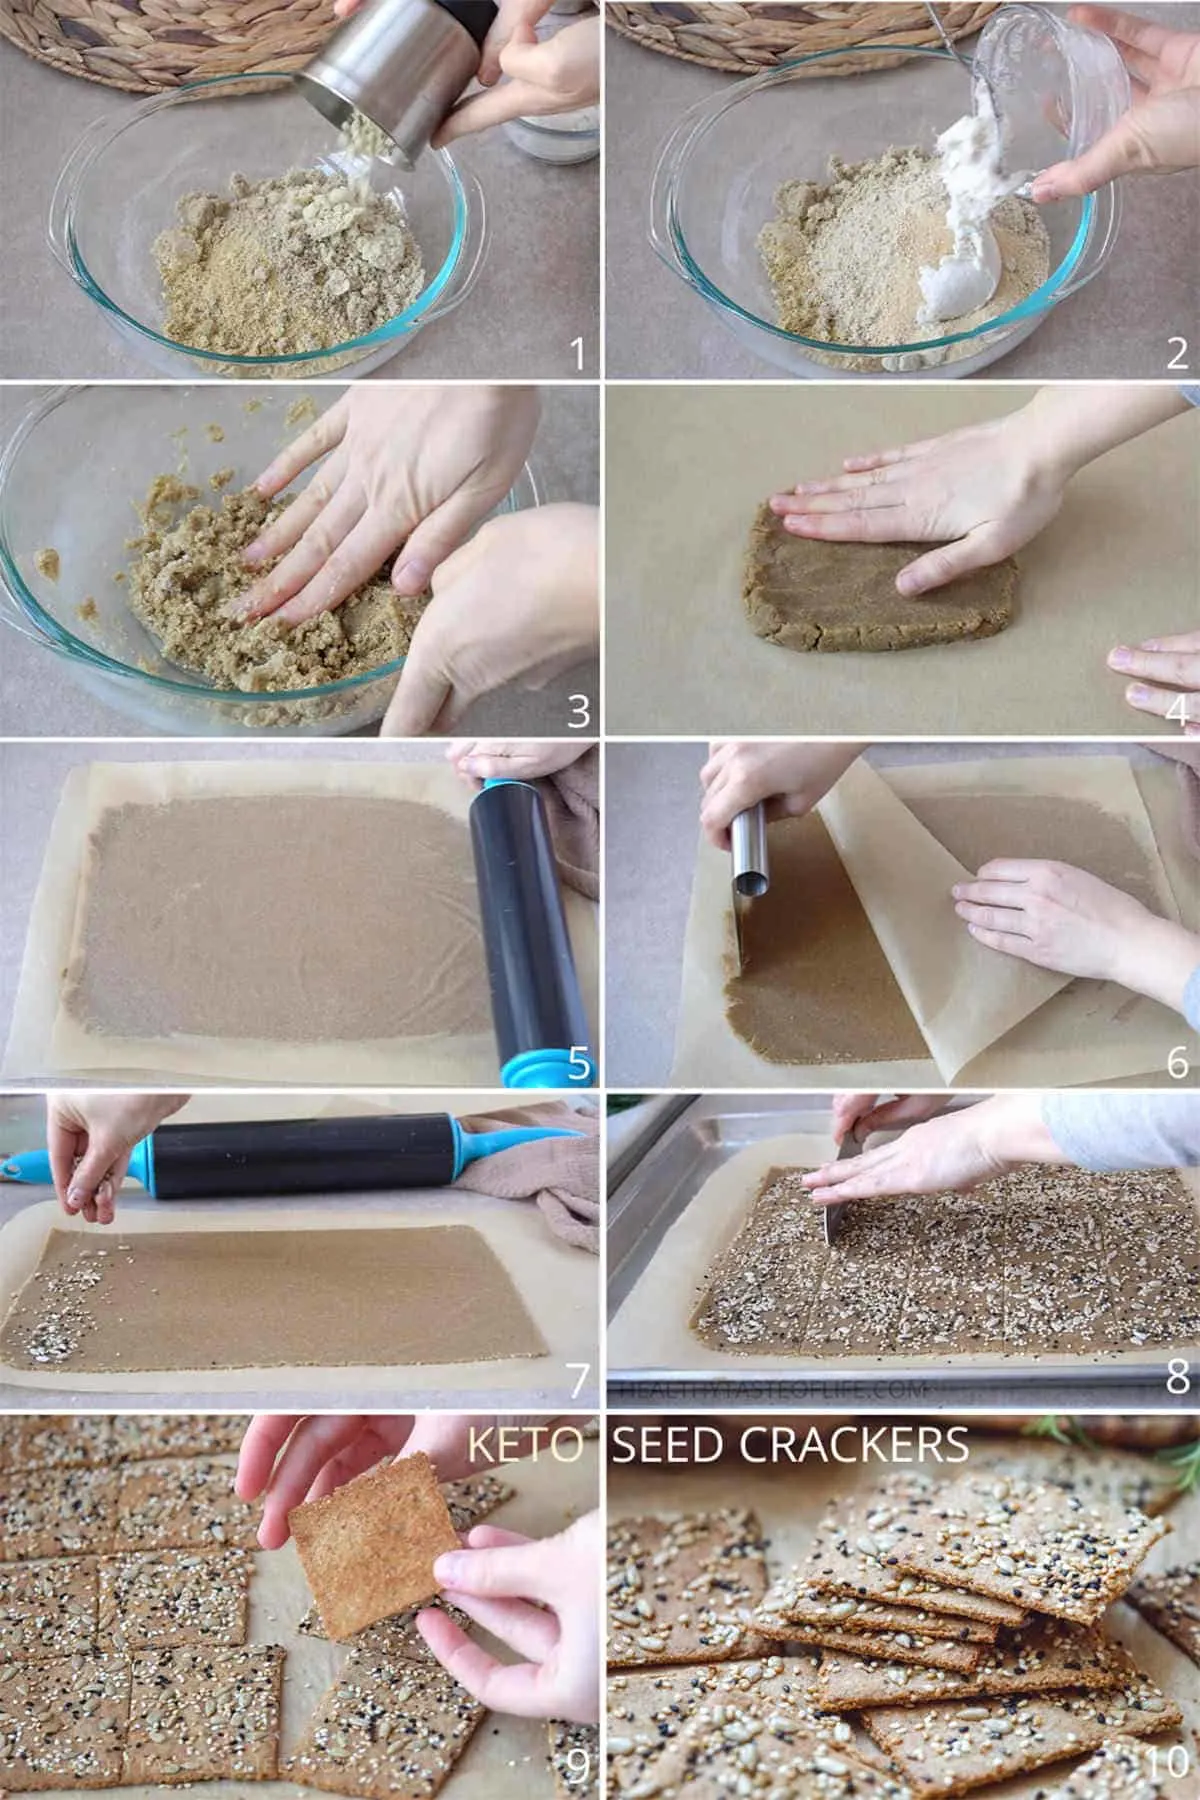 How To Make Keto Crackers. Keto Seed Crackers, Vegan, Low Crab, Nut Free, Gluten Free, Dairy Free, Grain Free Recipe